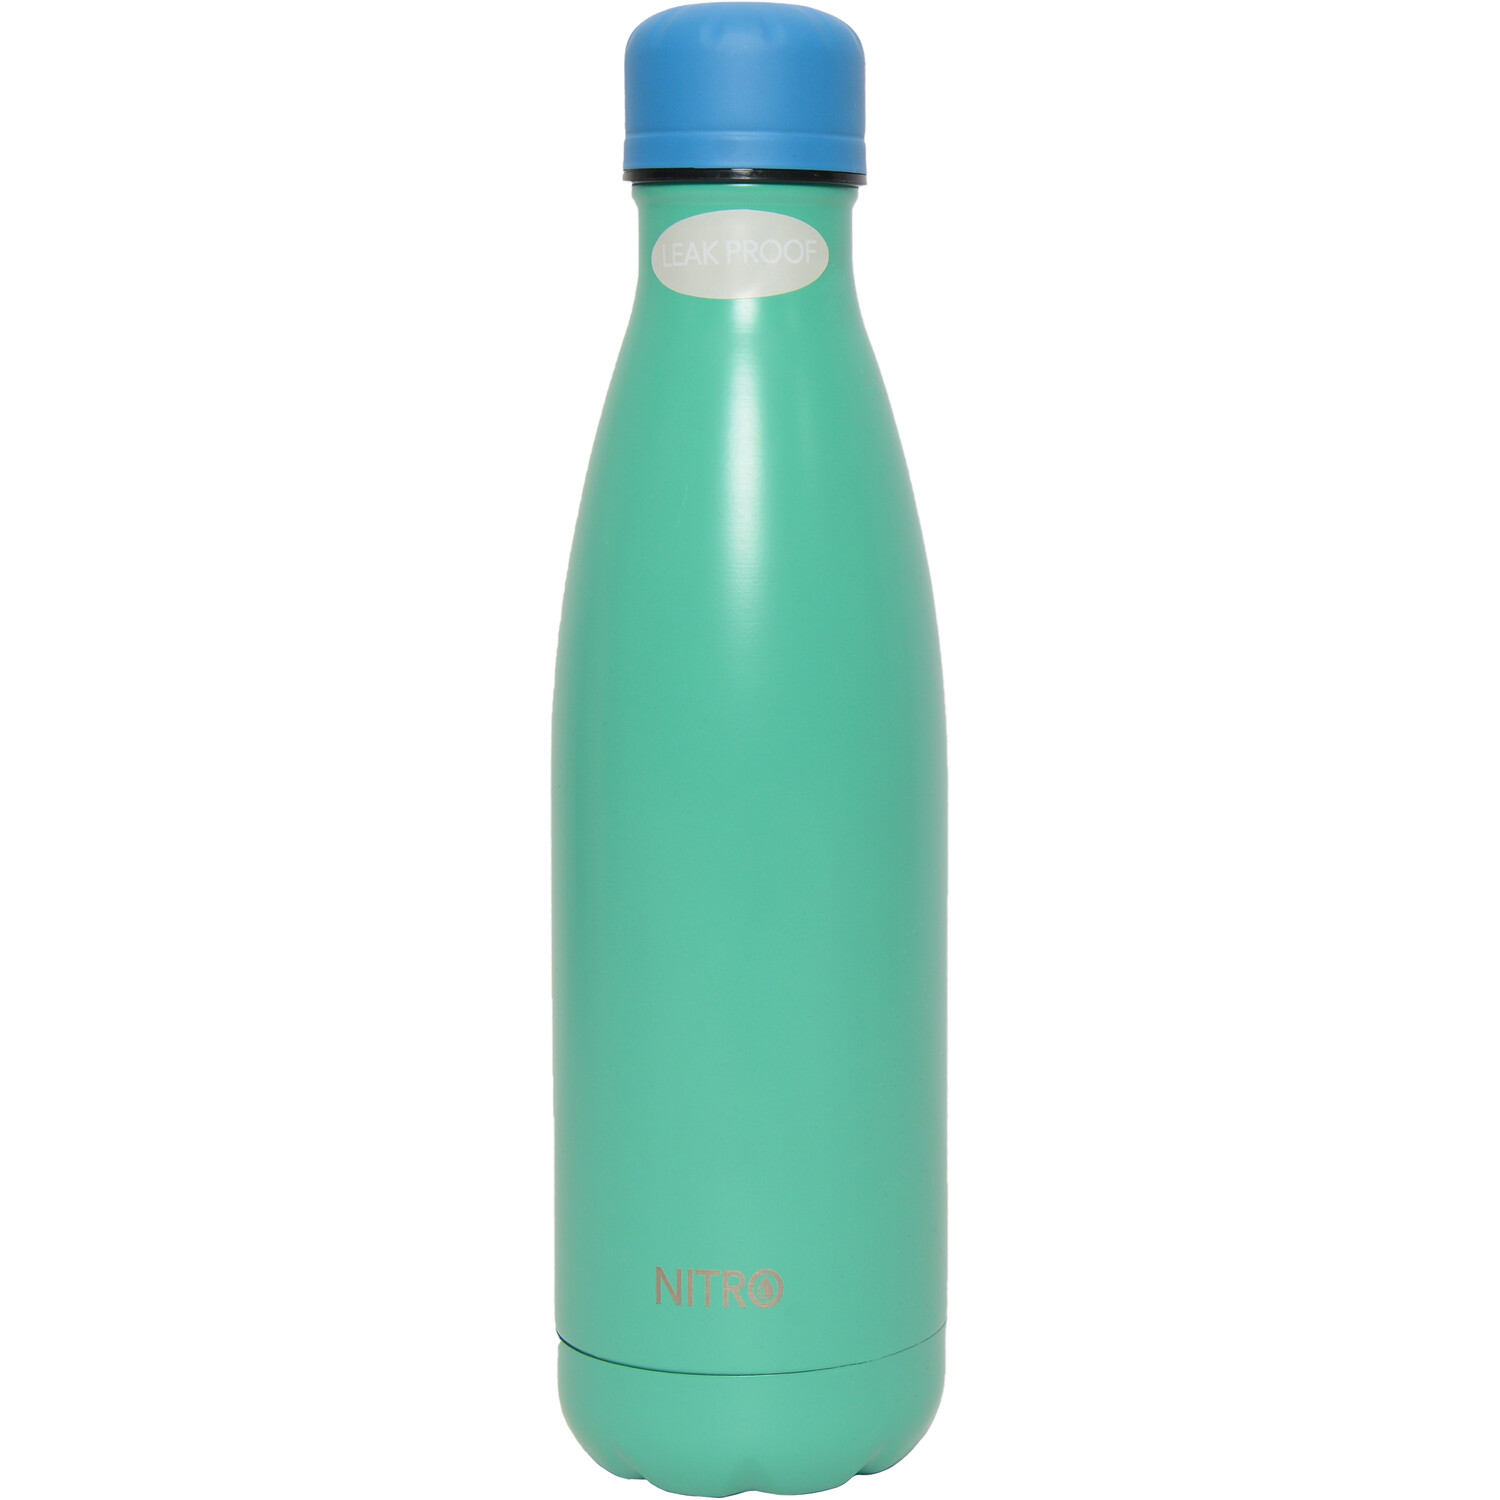 Nitro Neon Blue/Green Stainless Steel Bottle Image 3